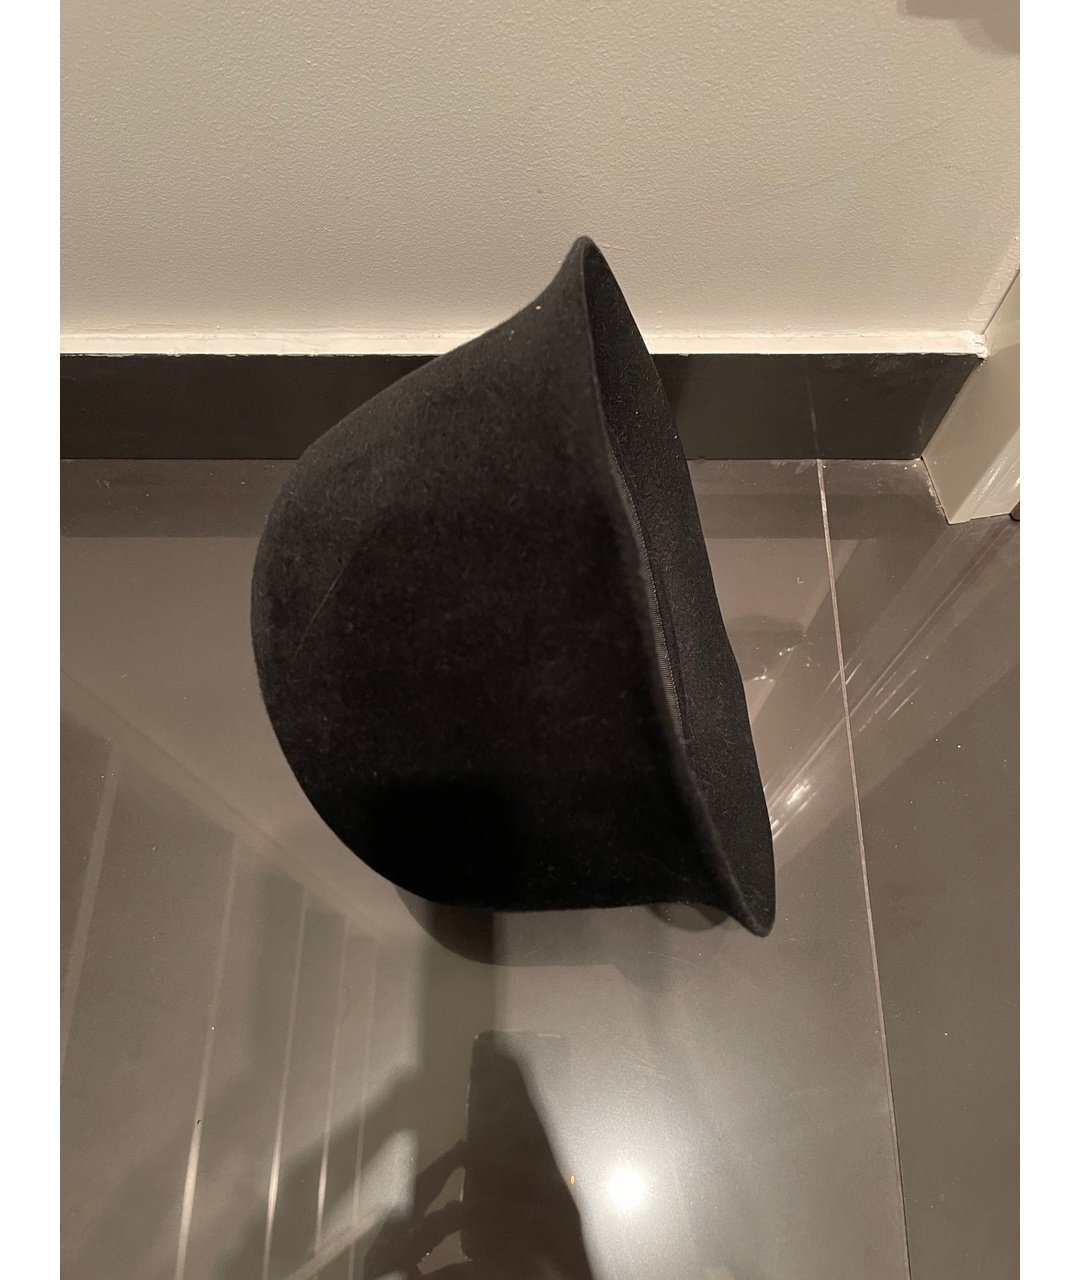 CHANEL PRE-OWNED Черная шерстяная шляпа, фото 3